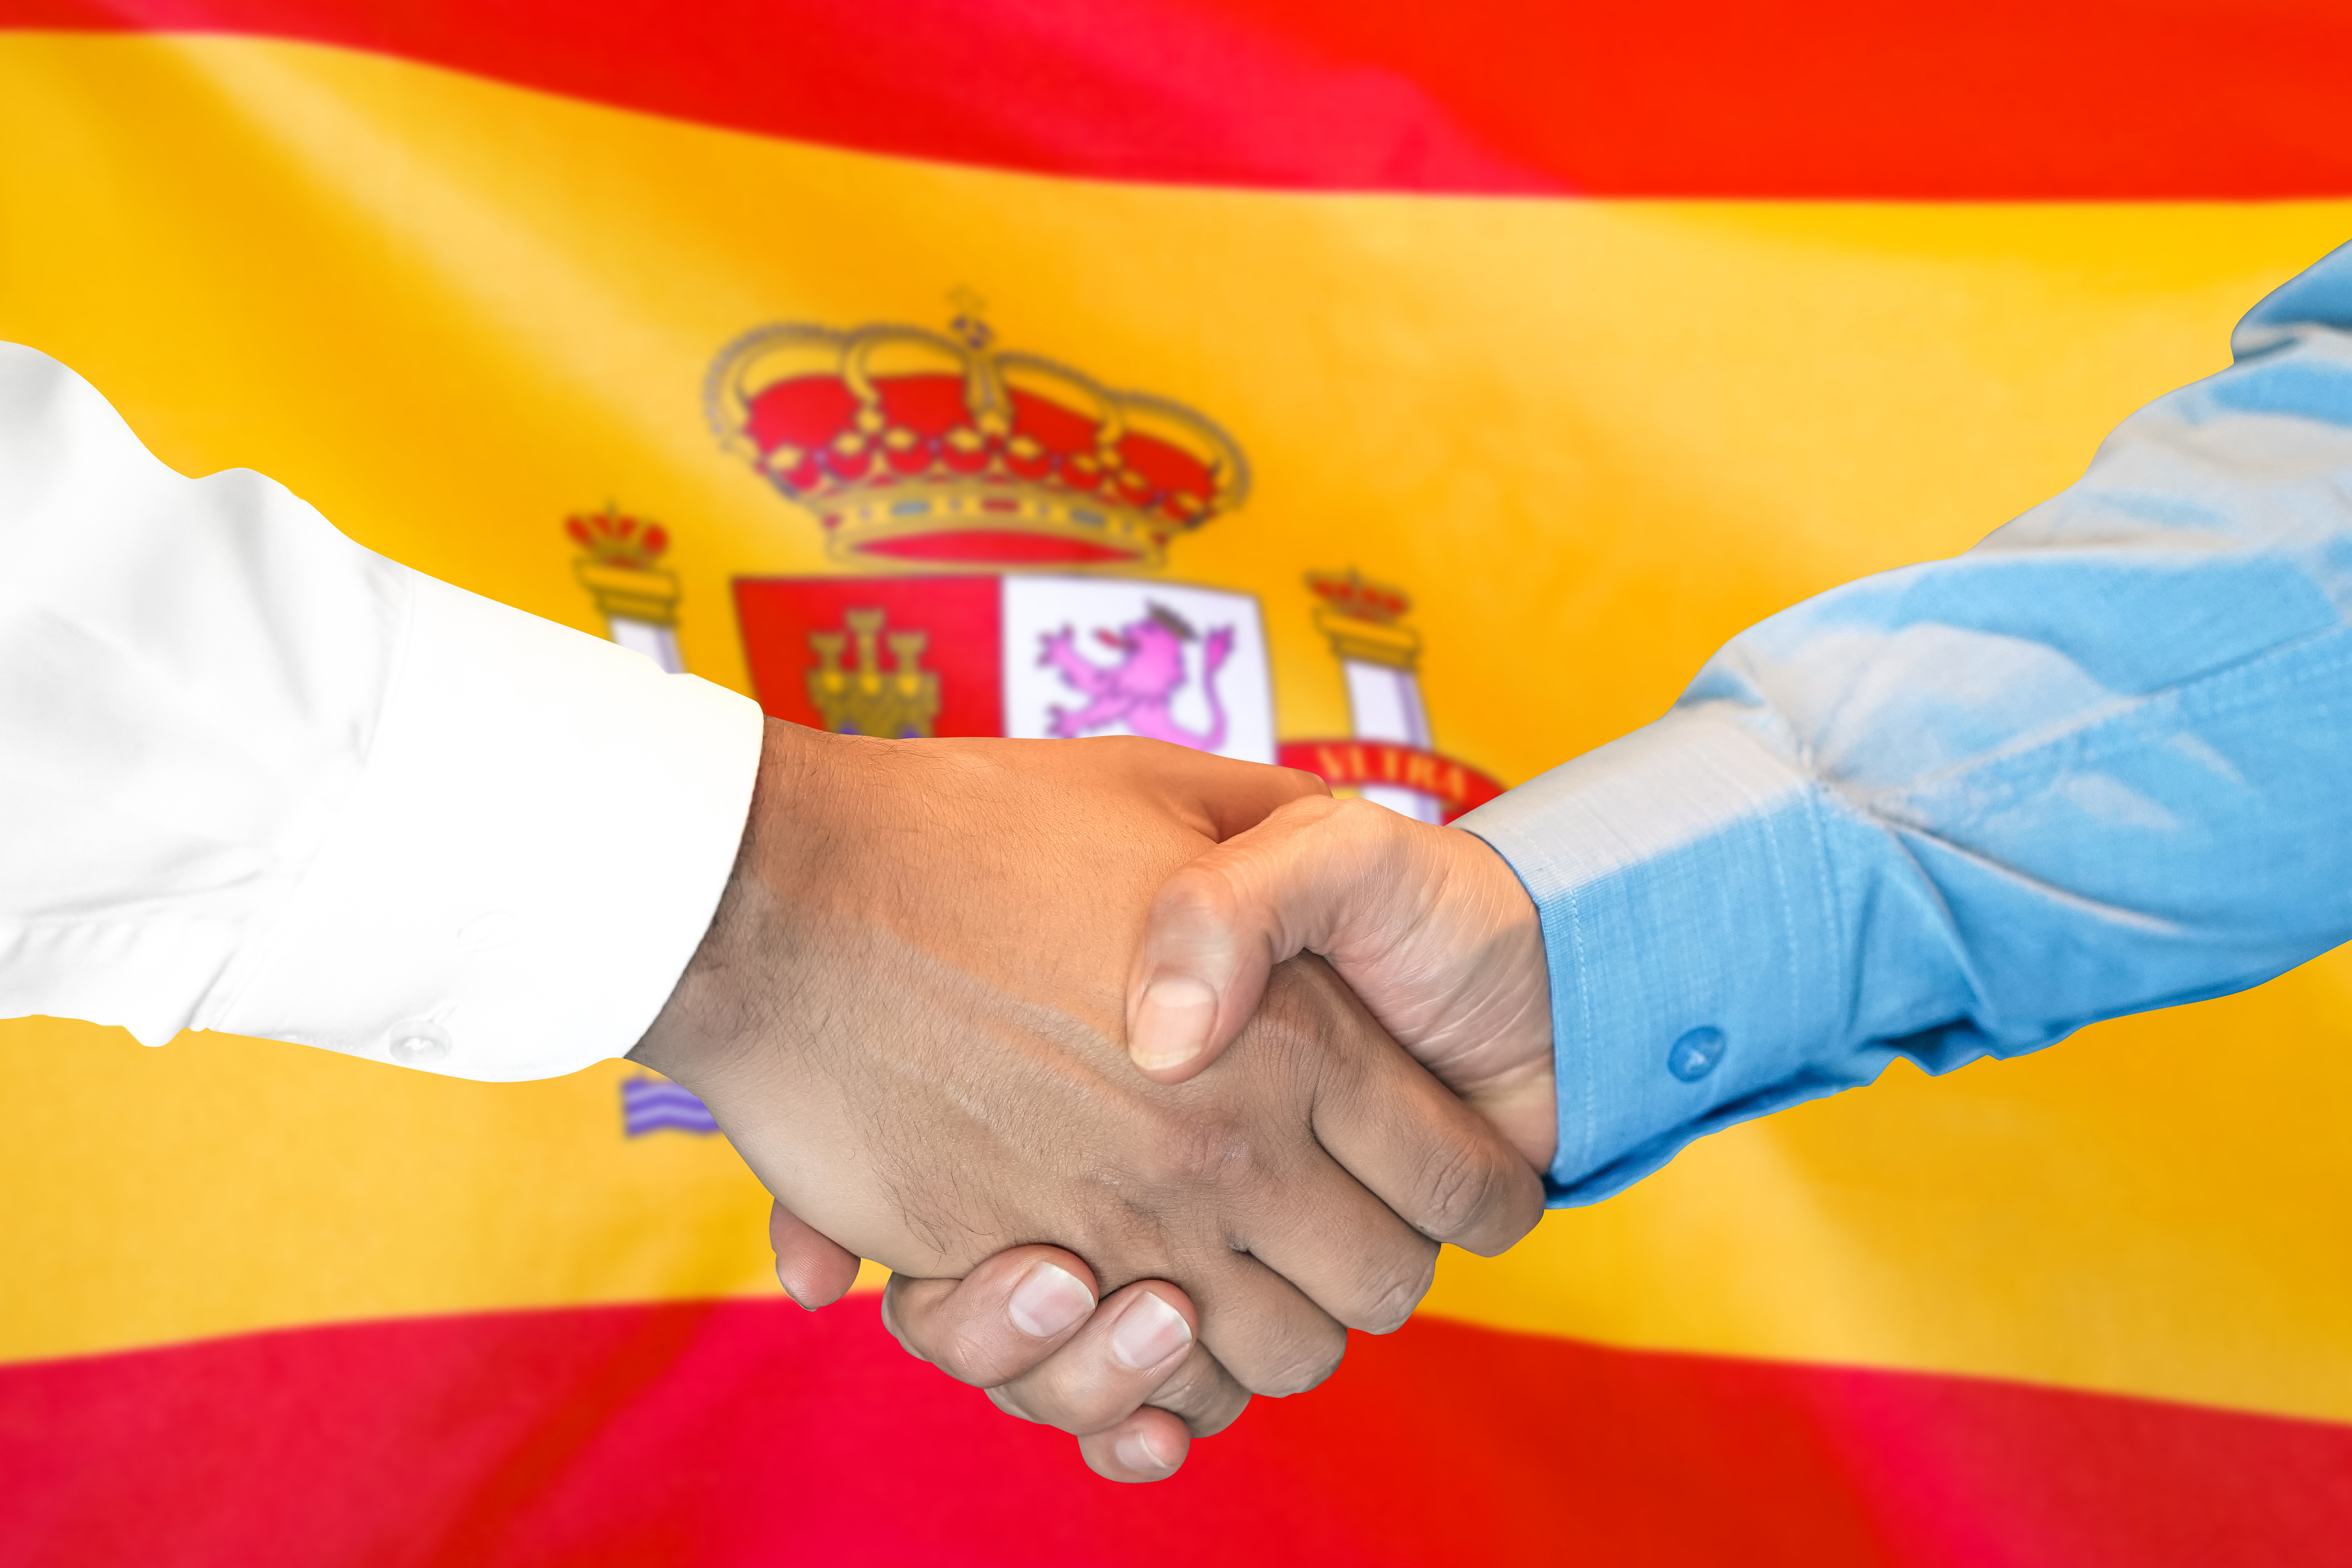 Рукопожатие на фоне флага Испании, работа в которой доступна для иностранцев